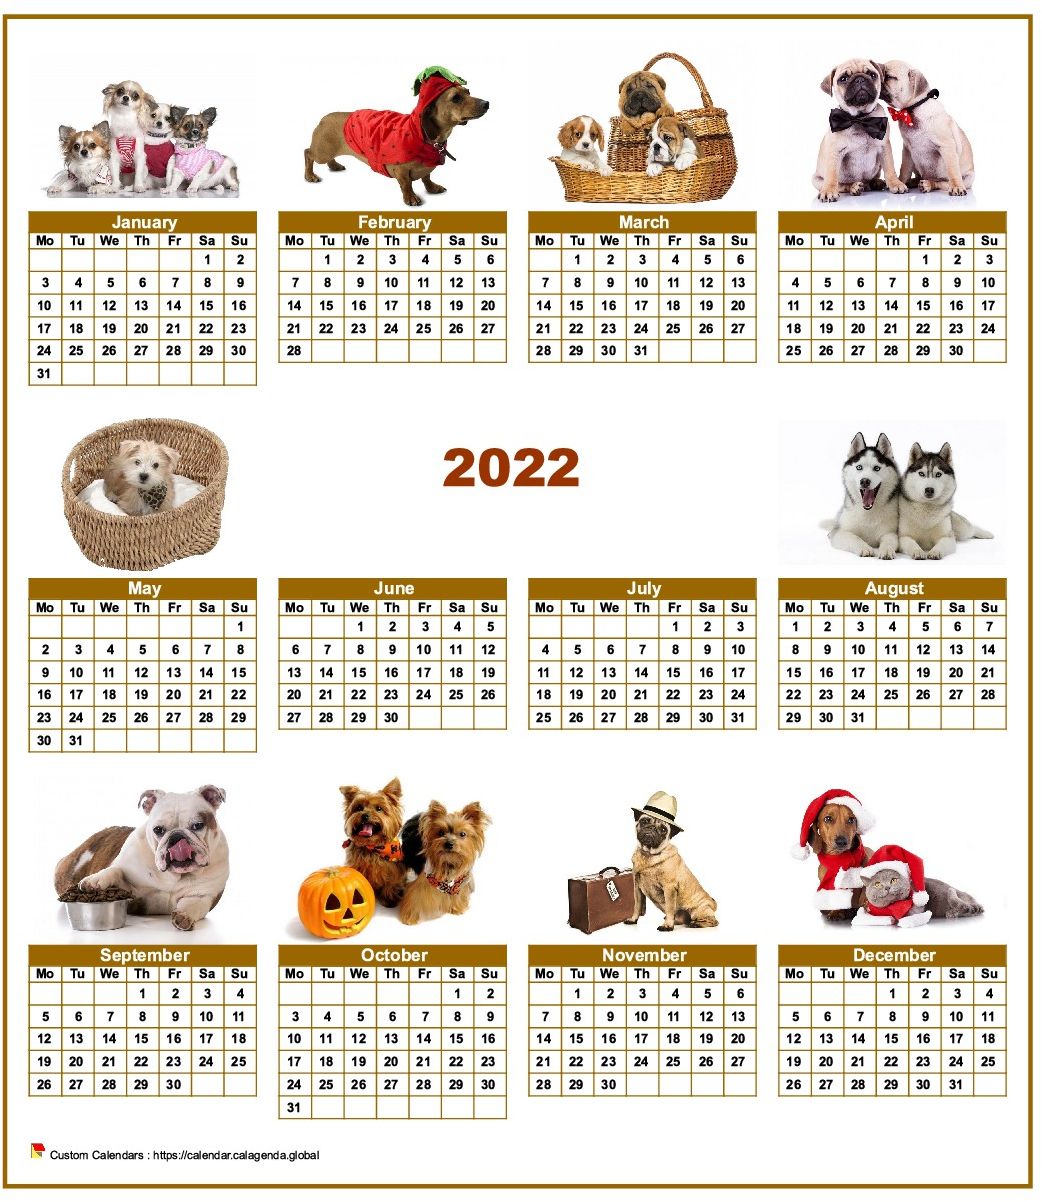 Calendar 2022 annual special 'dogs ' with 10 photos